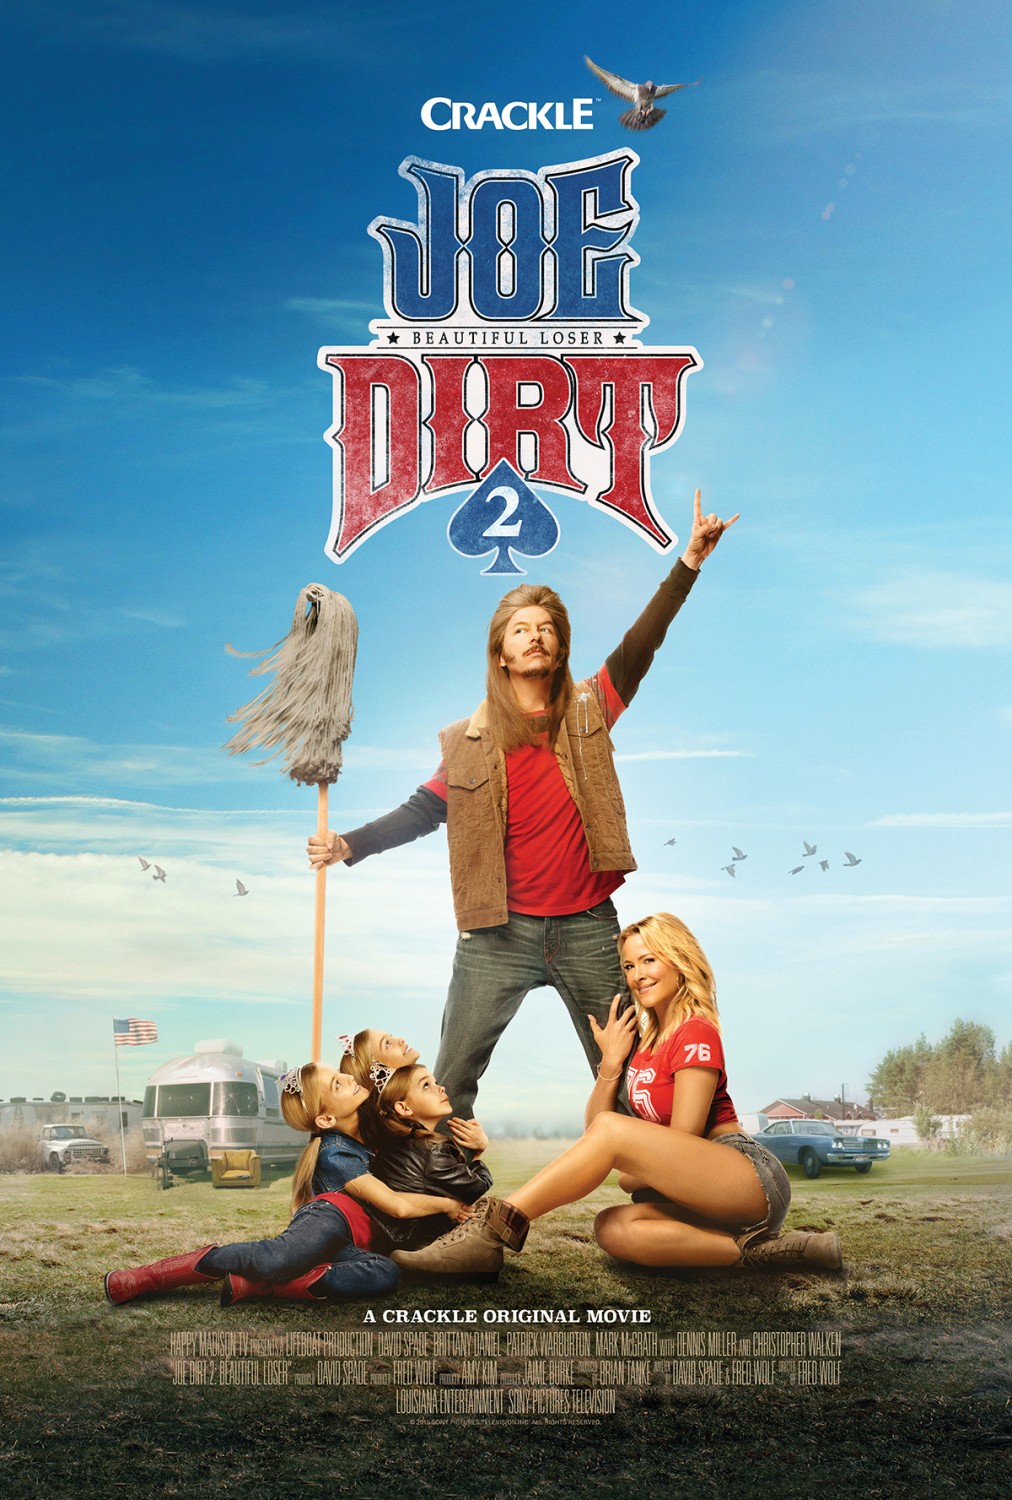 Extra Large TV Poster Image for Joe Dirt 2: Beautiful Loser (#2 of 2)